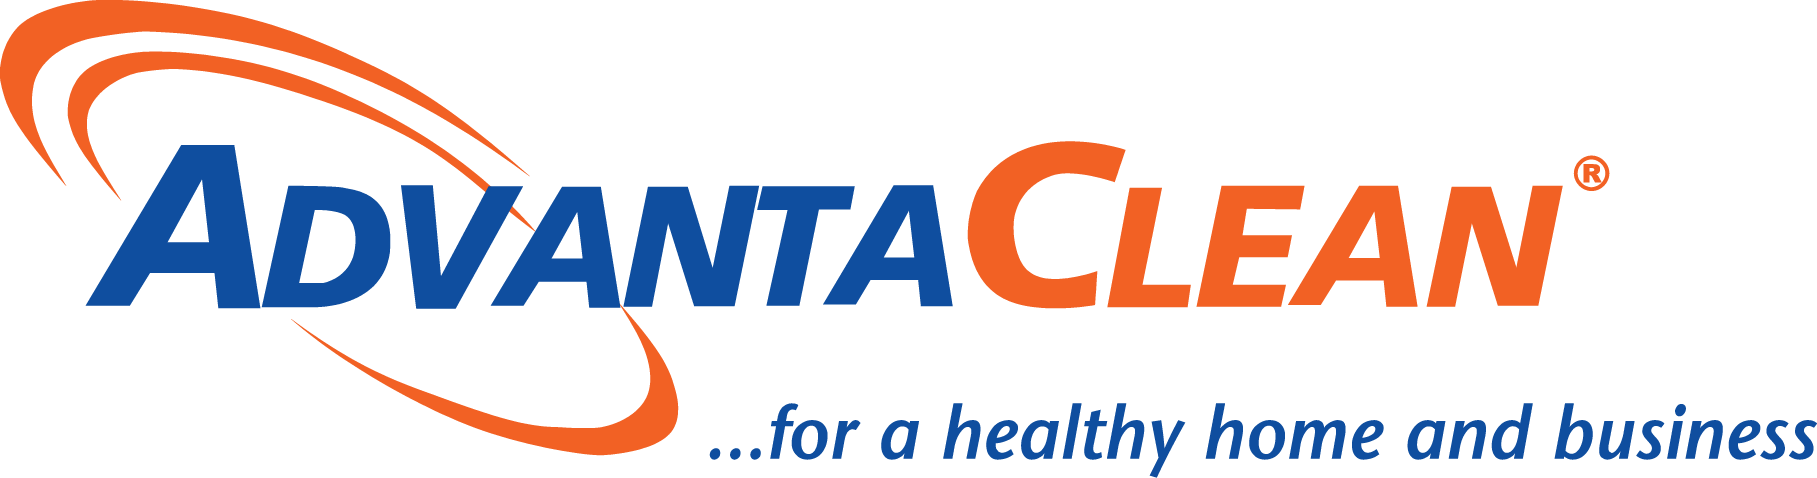 AdvantaClean of Chattanooga Logo